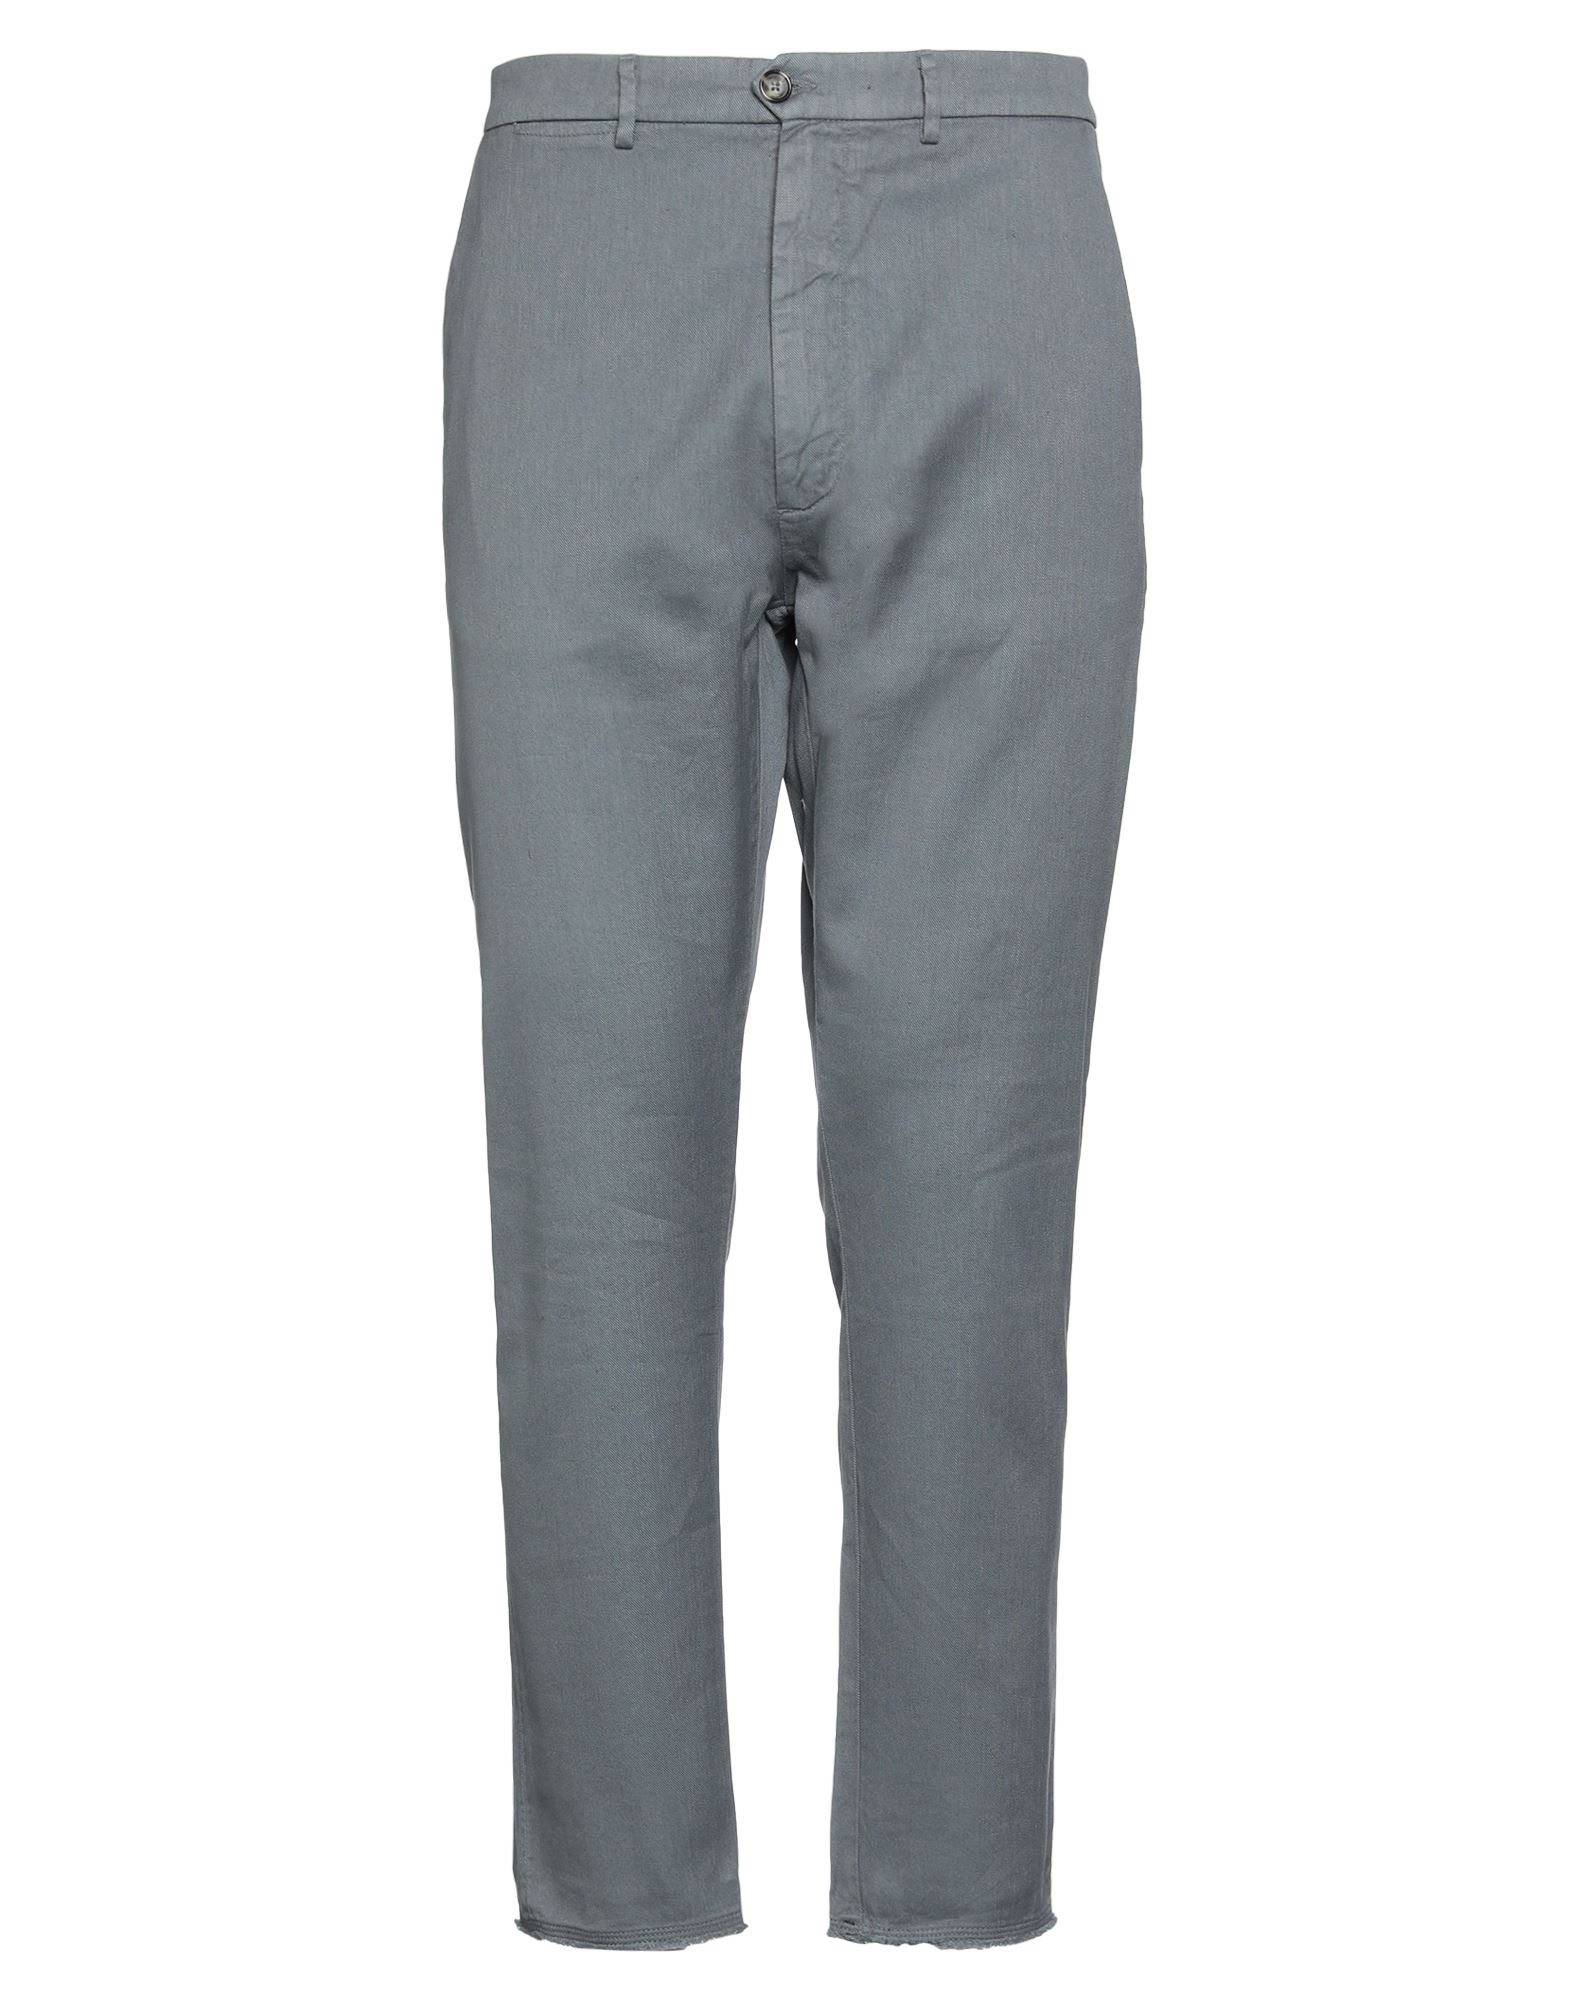 Pence Pants In Grey